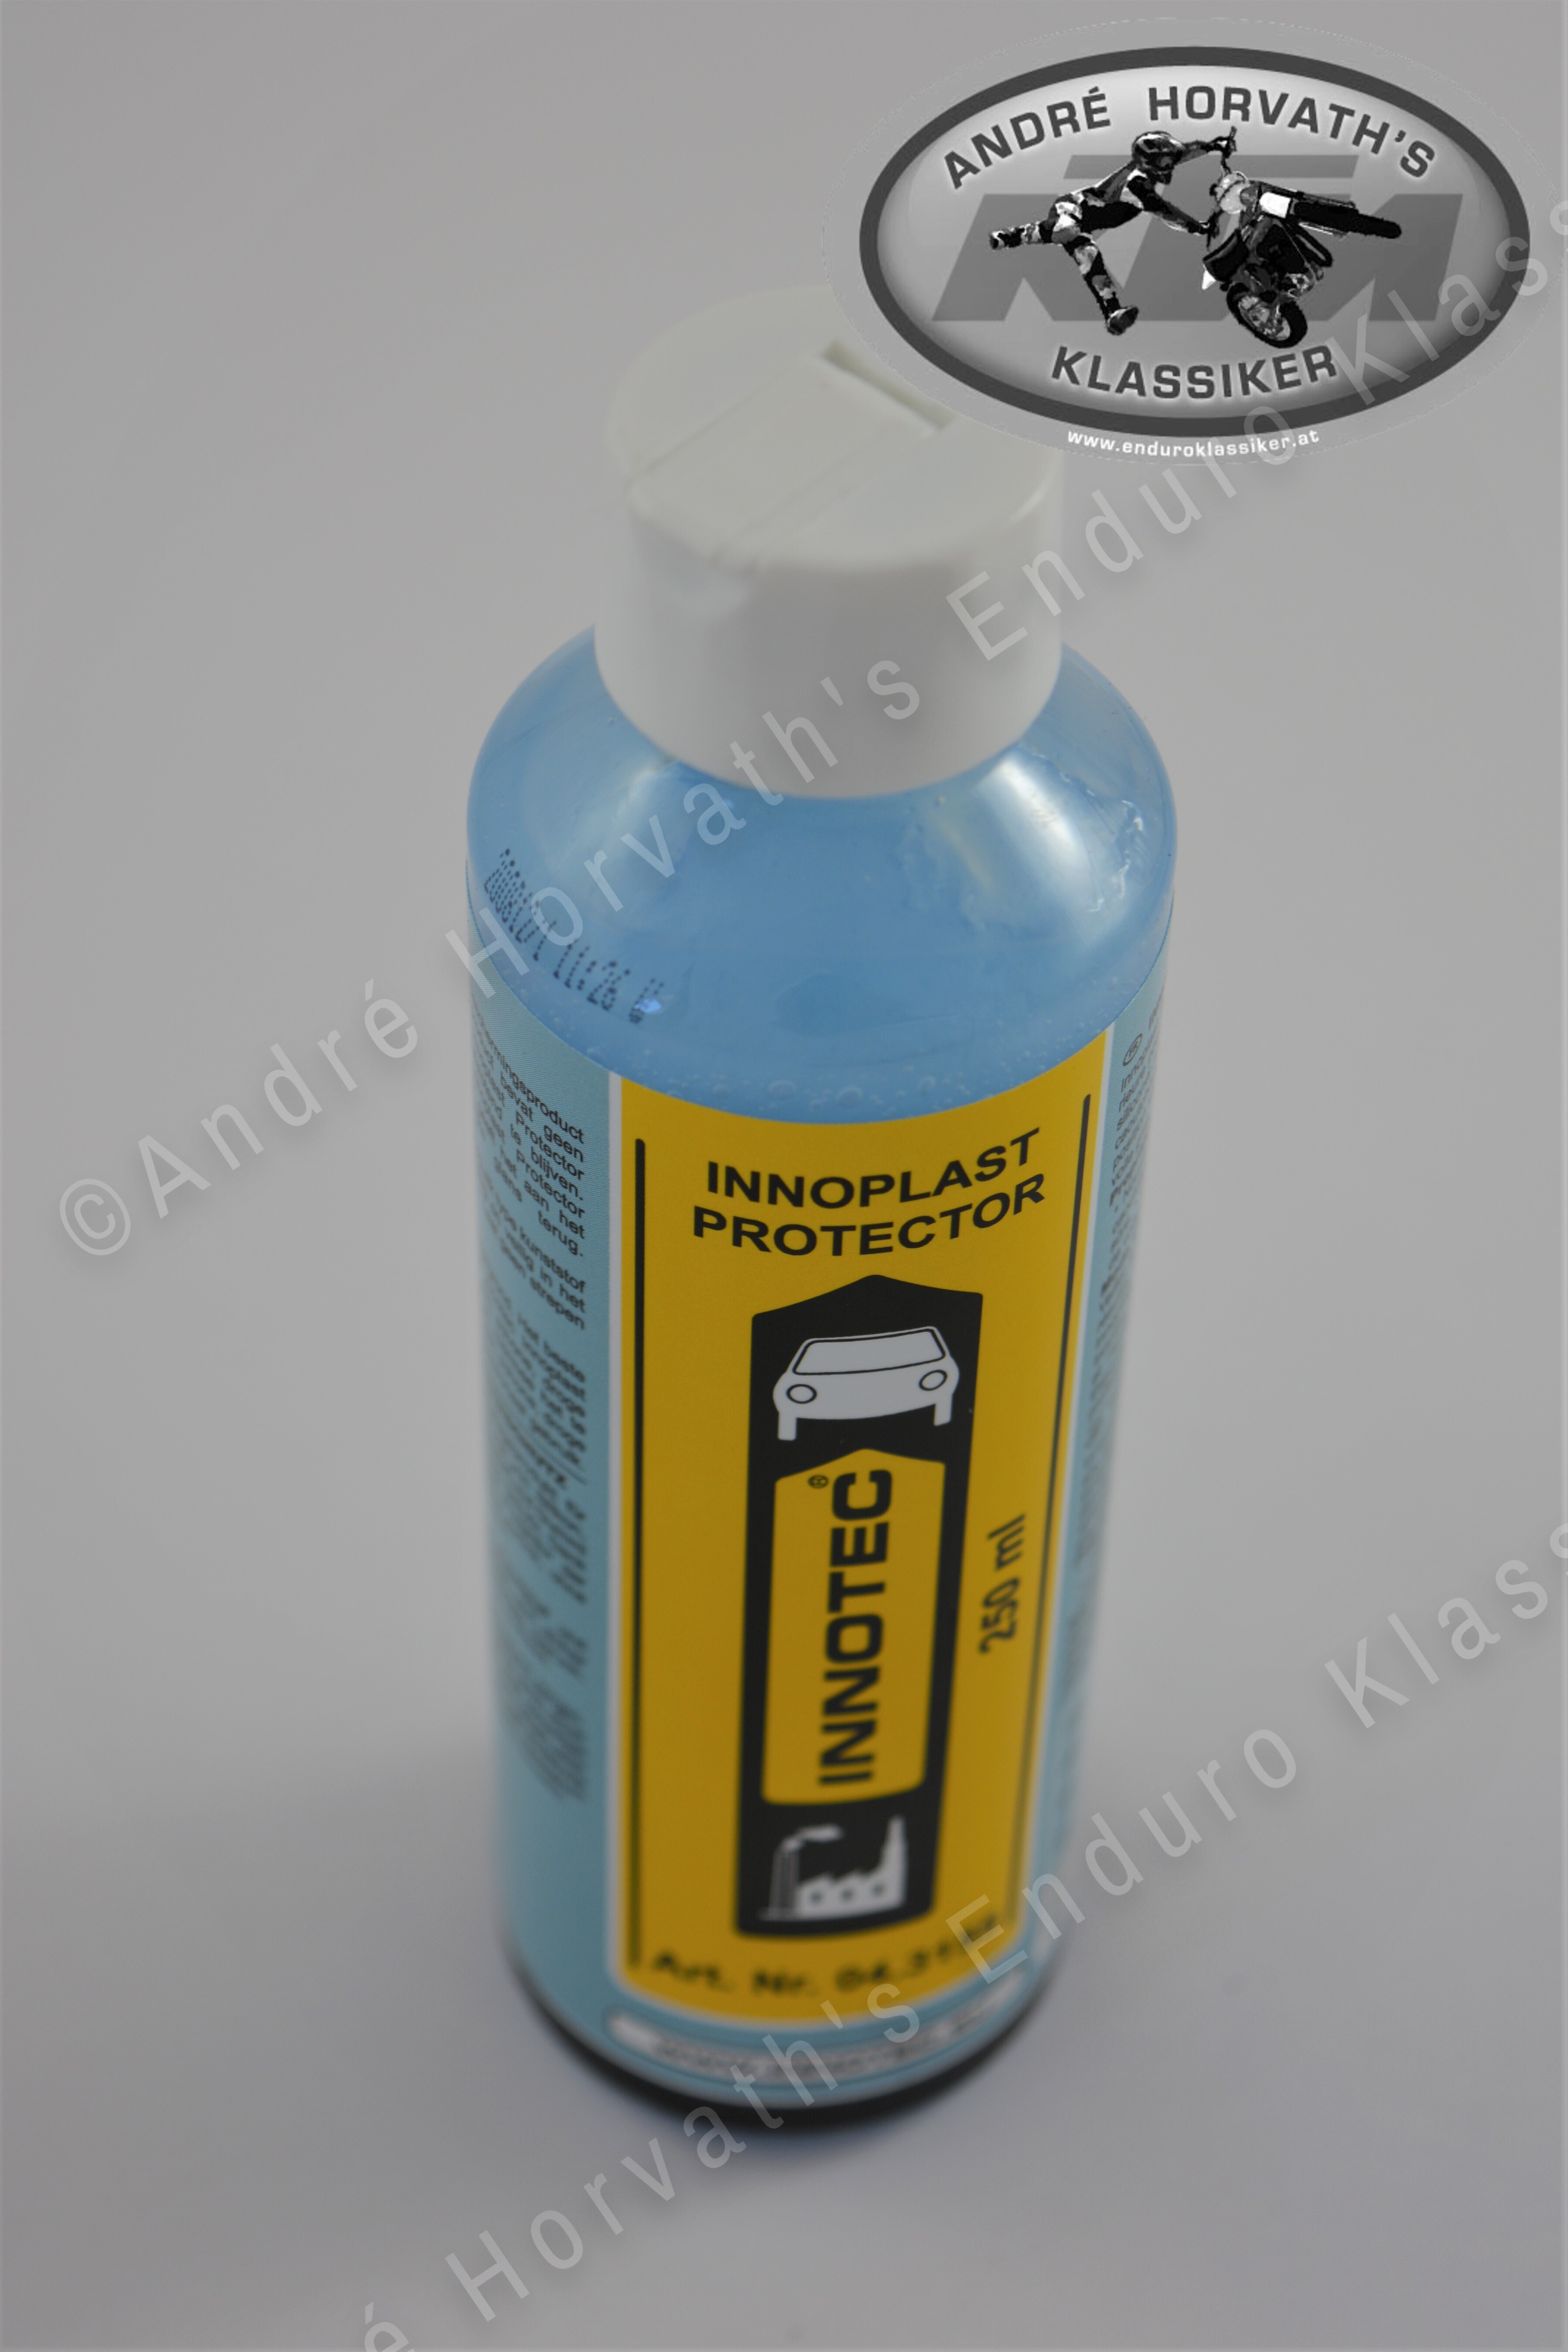 Innotec Innoplast Protector, 250ml bottle, is a high grade